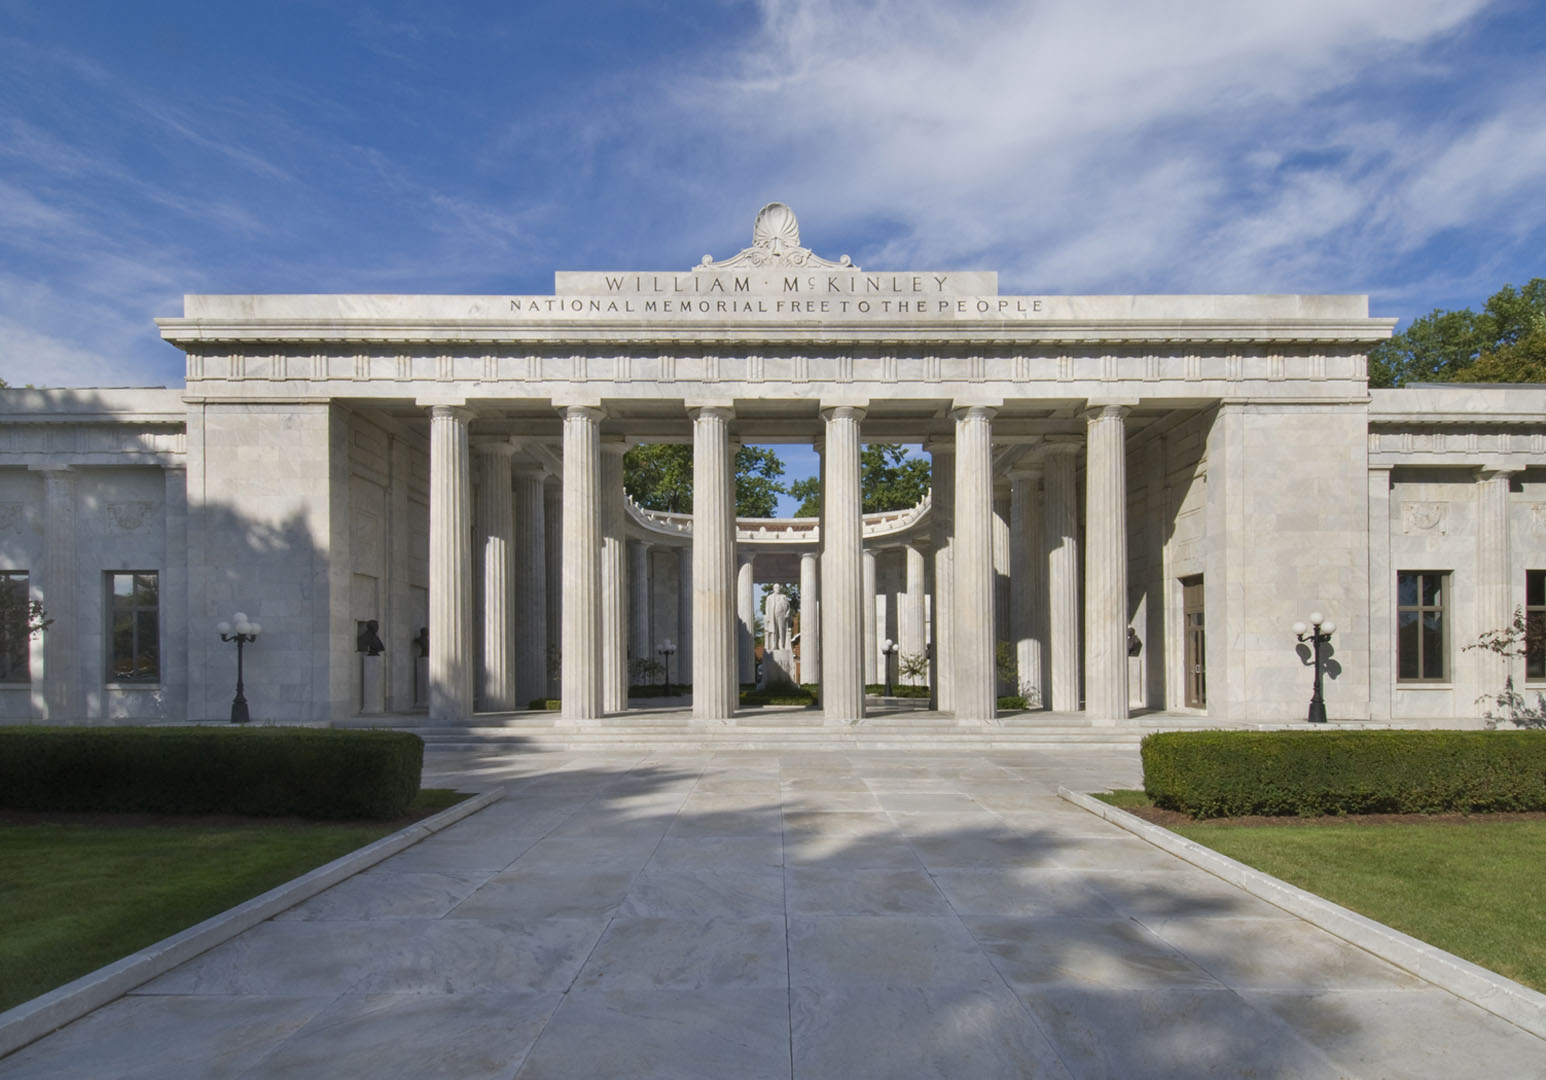 McKinley Memorial, Portico leading to courtyard